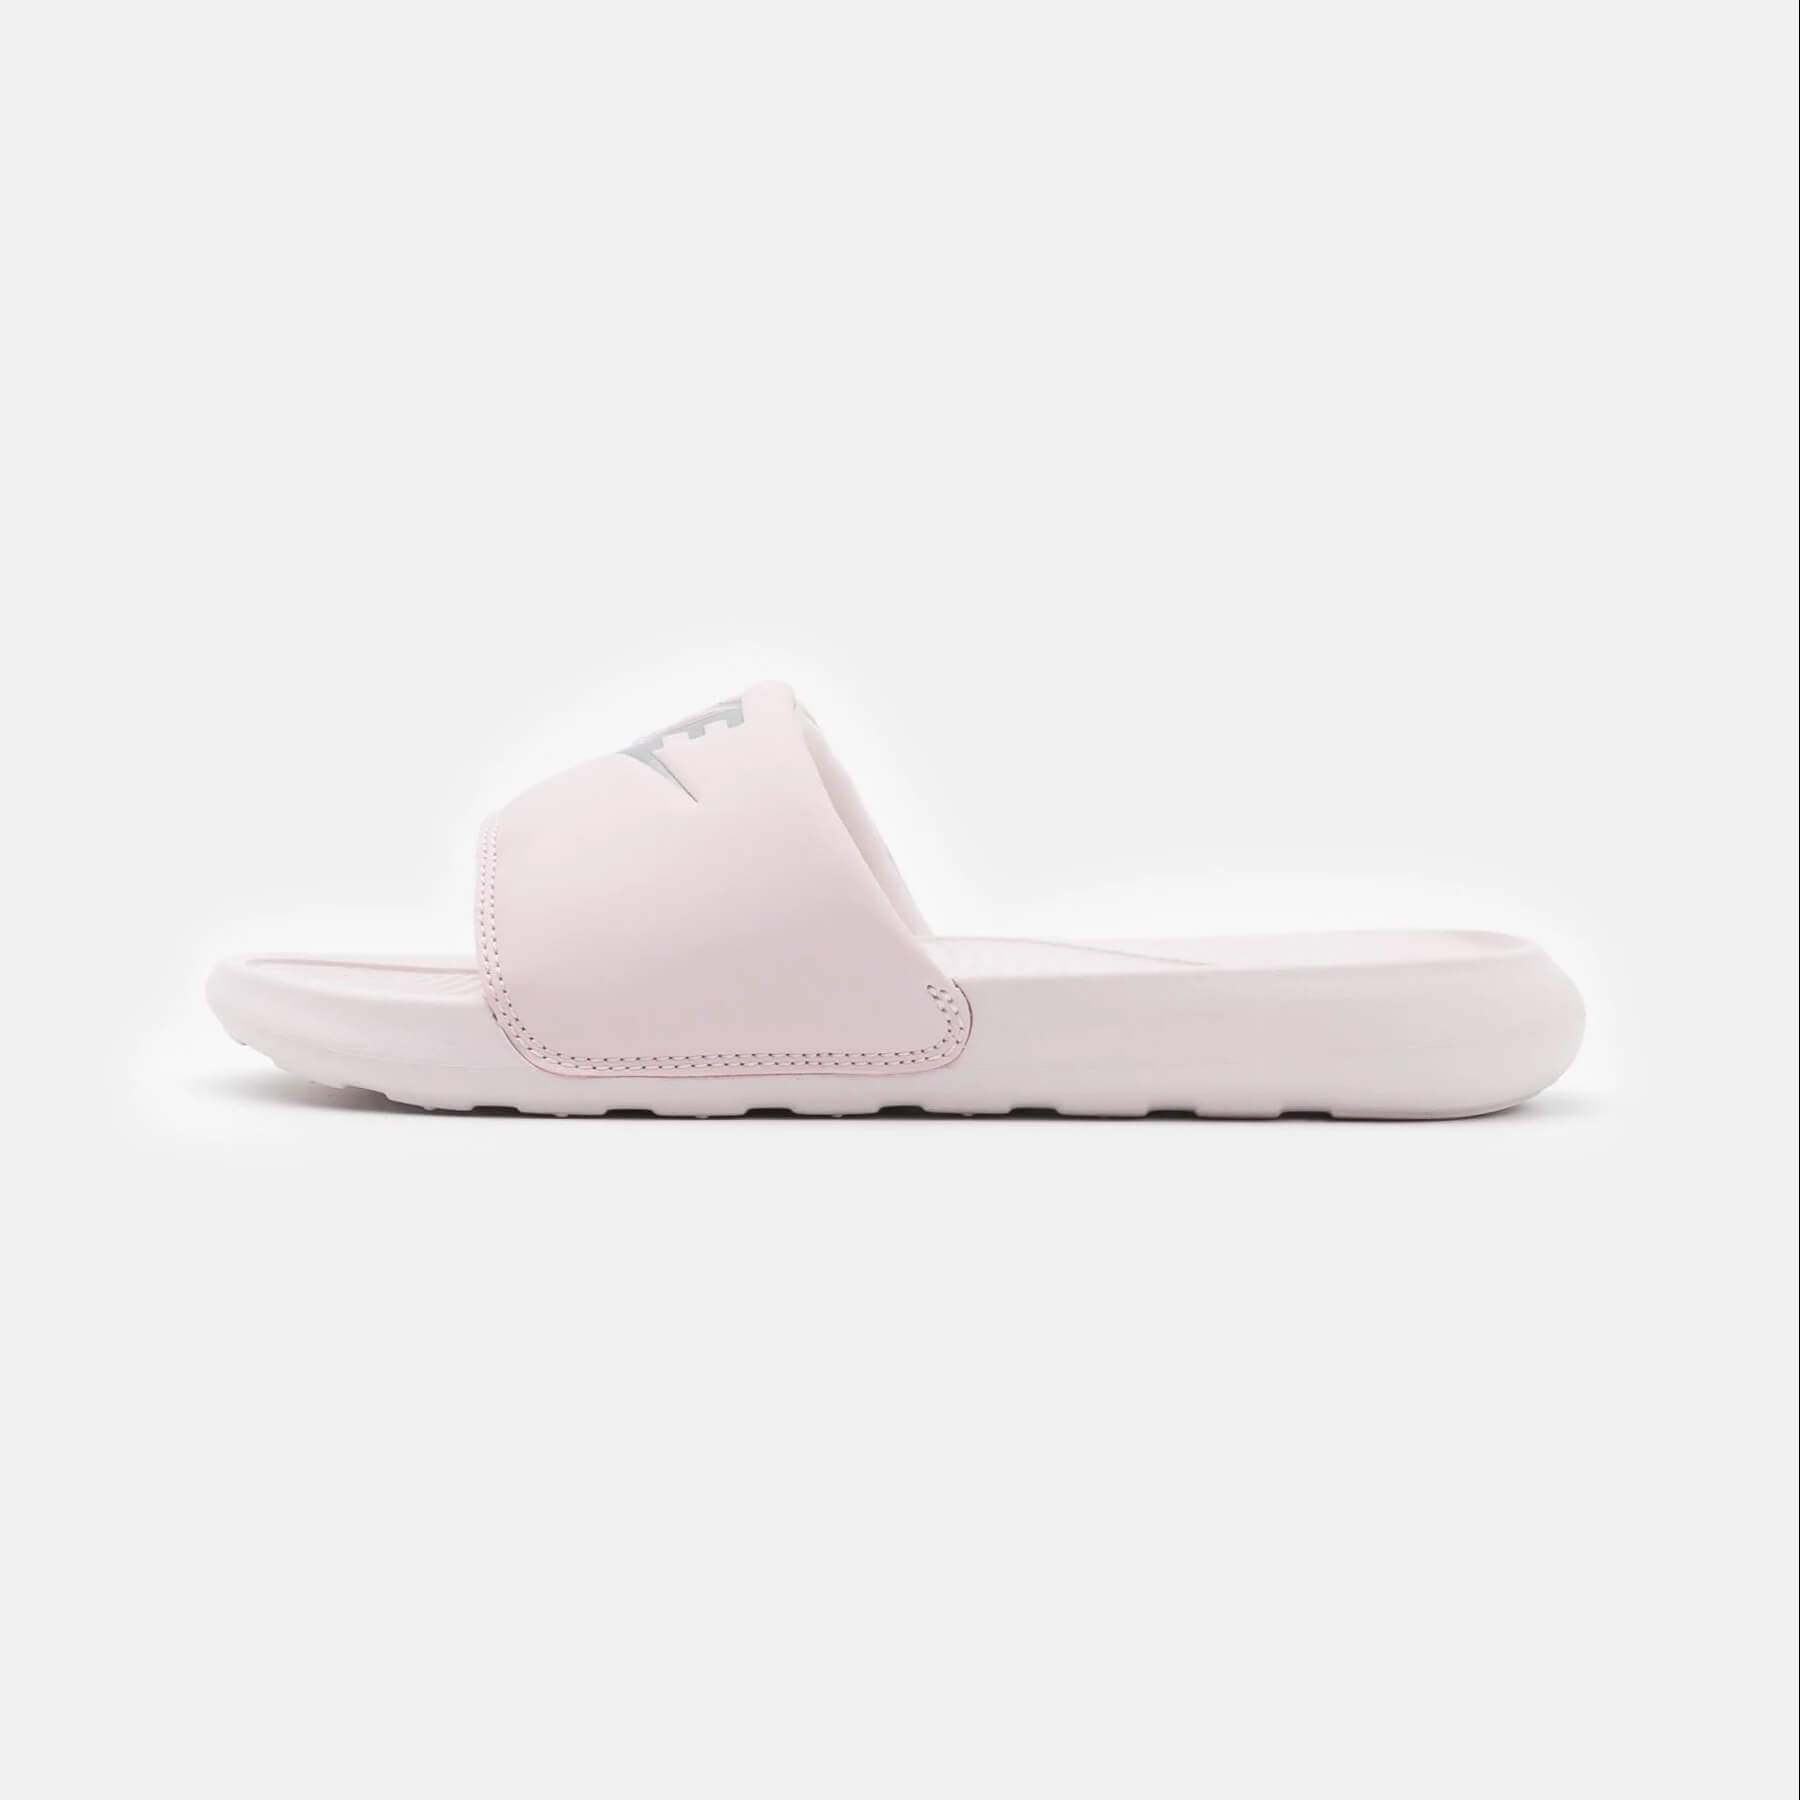 Шлепанцы на плоской подошве Унисекс Nike Sportswear Victori One Slide, светло-розовый/серебристый женские летние шлепанцы размера плюс 43 нескользящие шлепанцы для ванной пляжные сандалии с открытым носком на плоской подошве повседнев